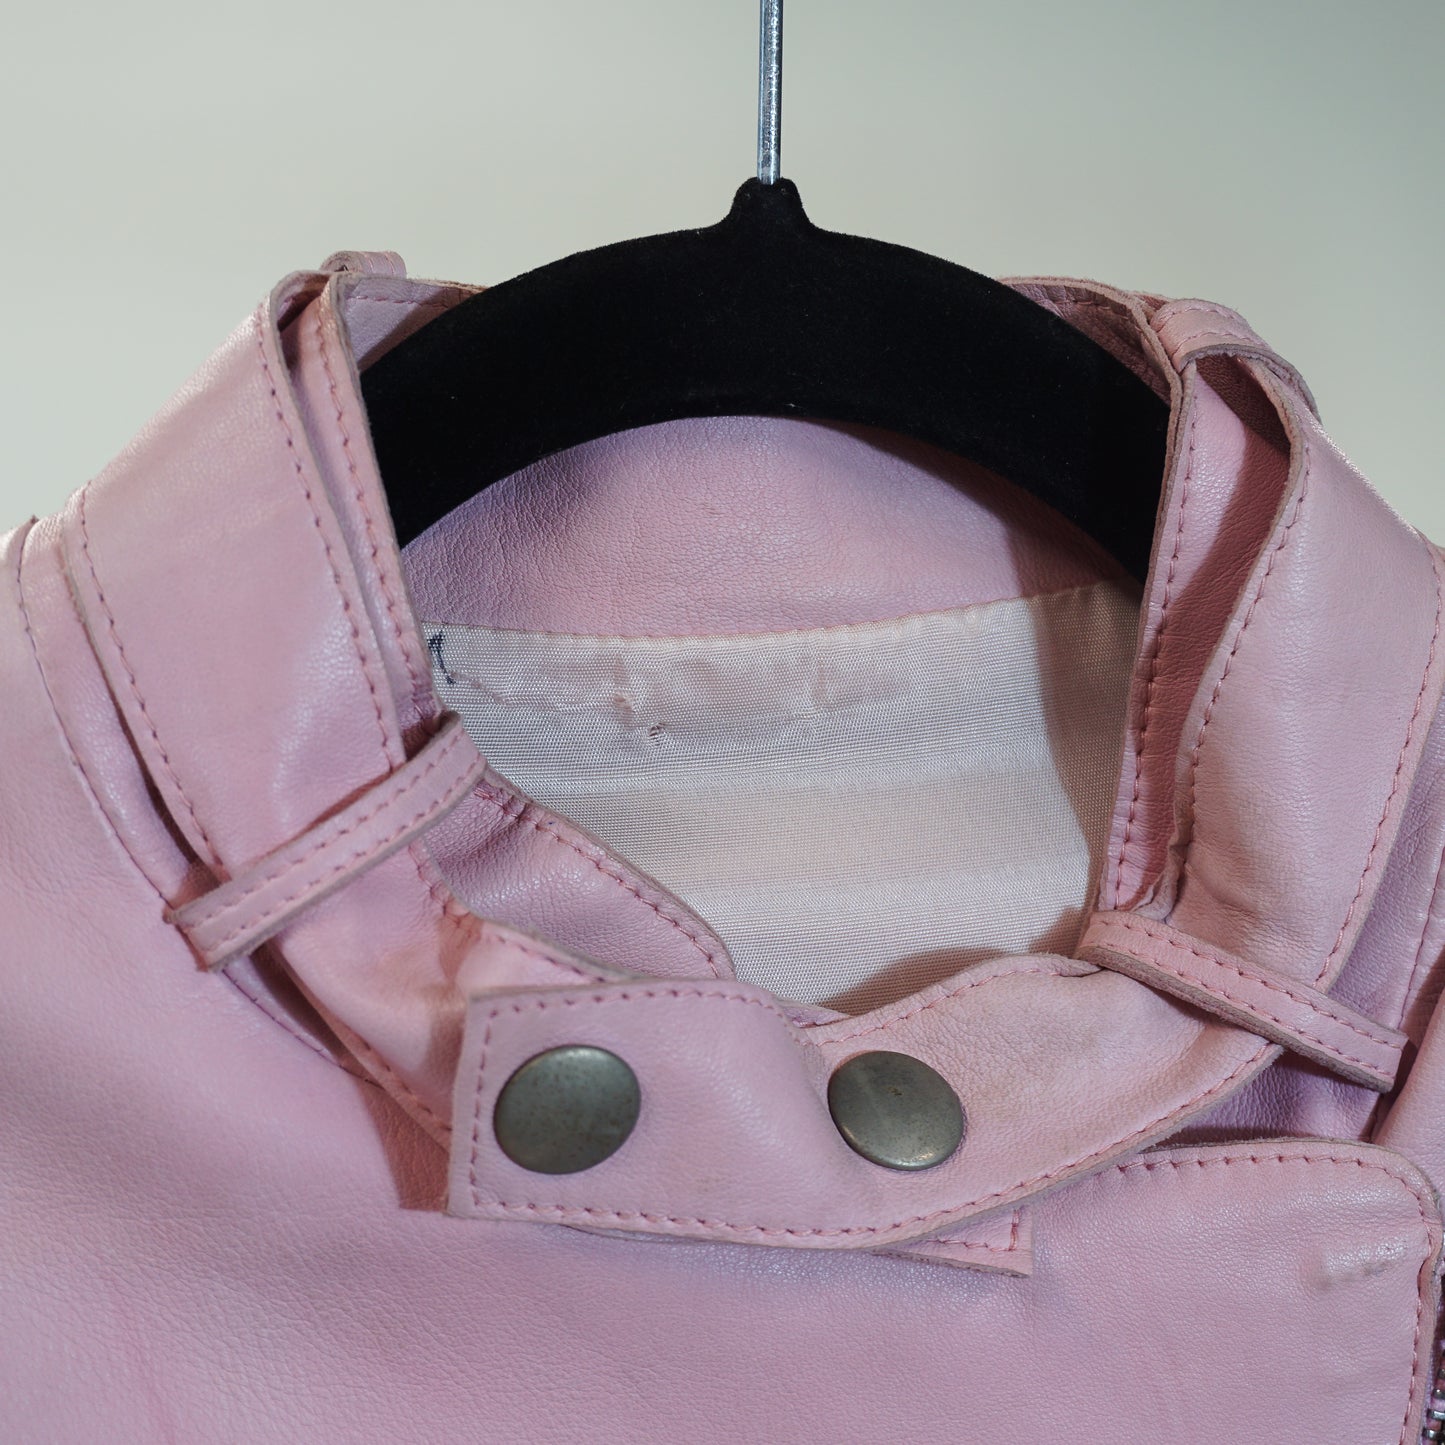 Y2K Cropped Pink Faux Leather Moto Jacket (Women's S)